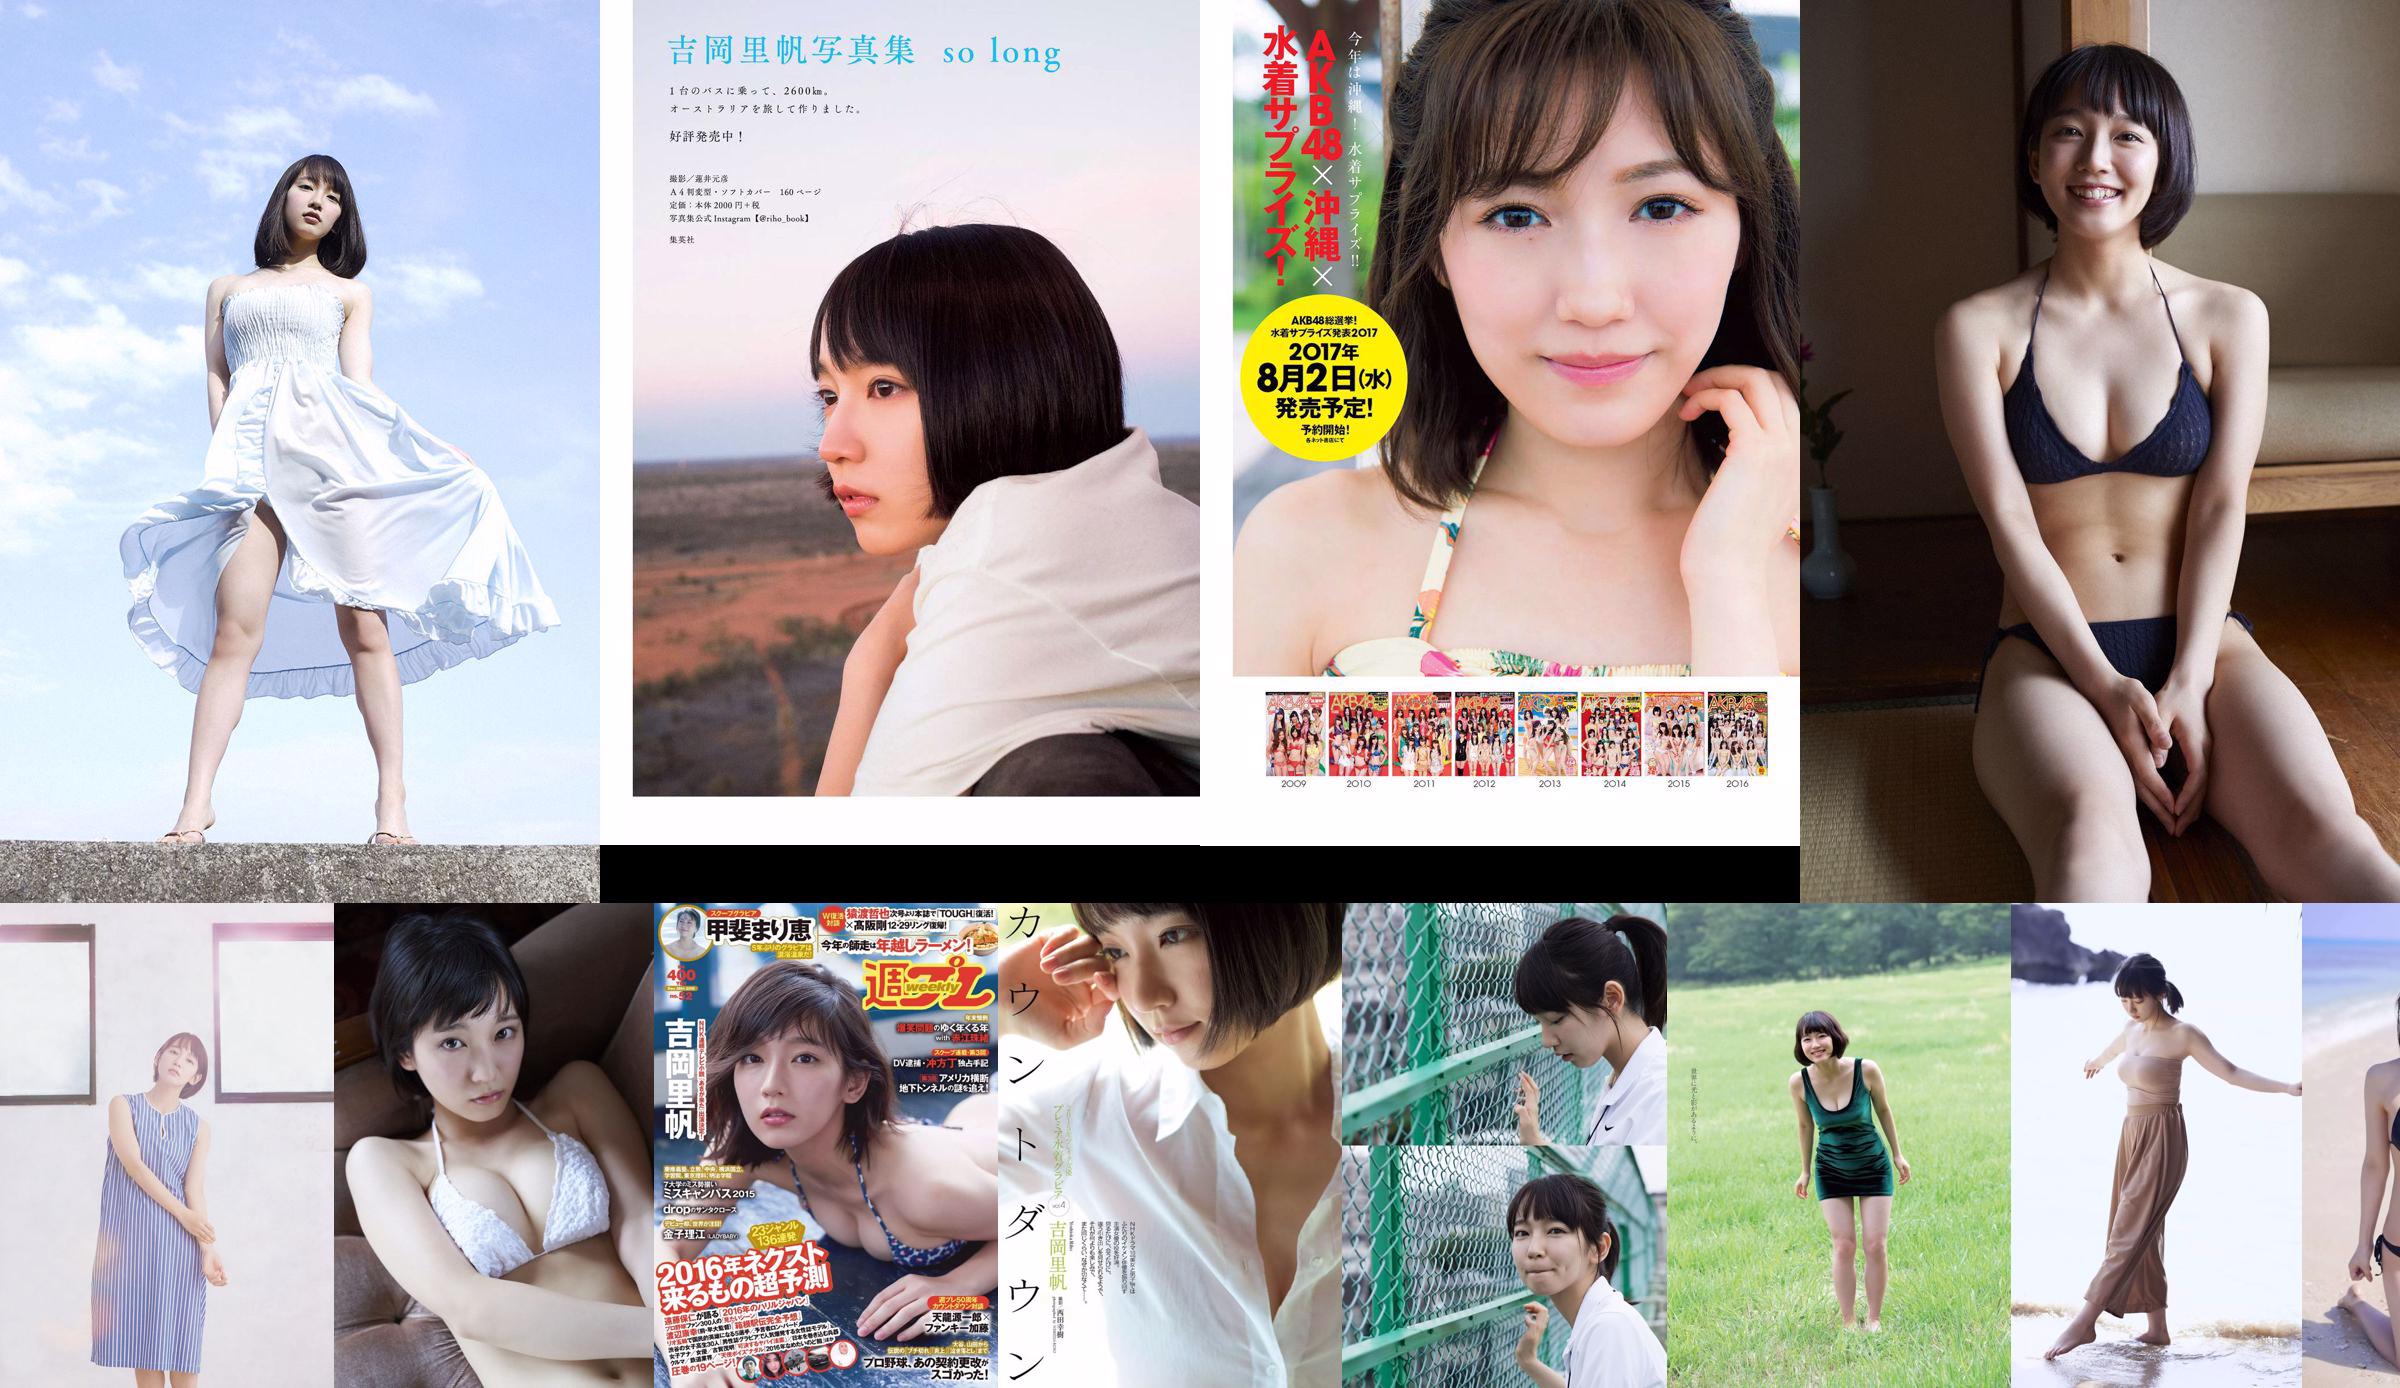 [Bomb.TV] uitgave oktober 2014 Riho Yoshioka Riho Yoshioka / Riho Yoshioka No.f8c501 Pagina 10